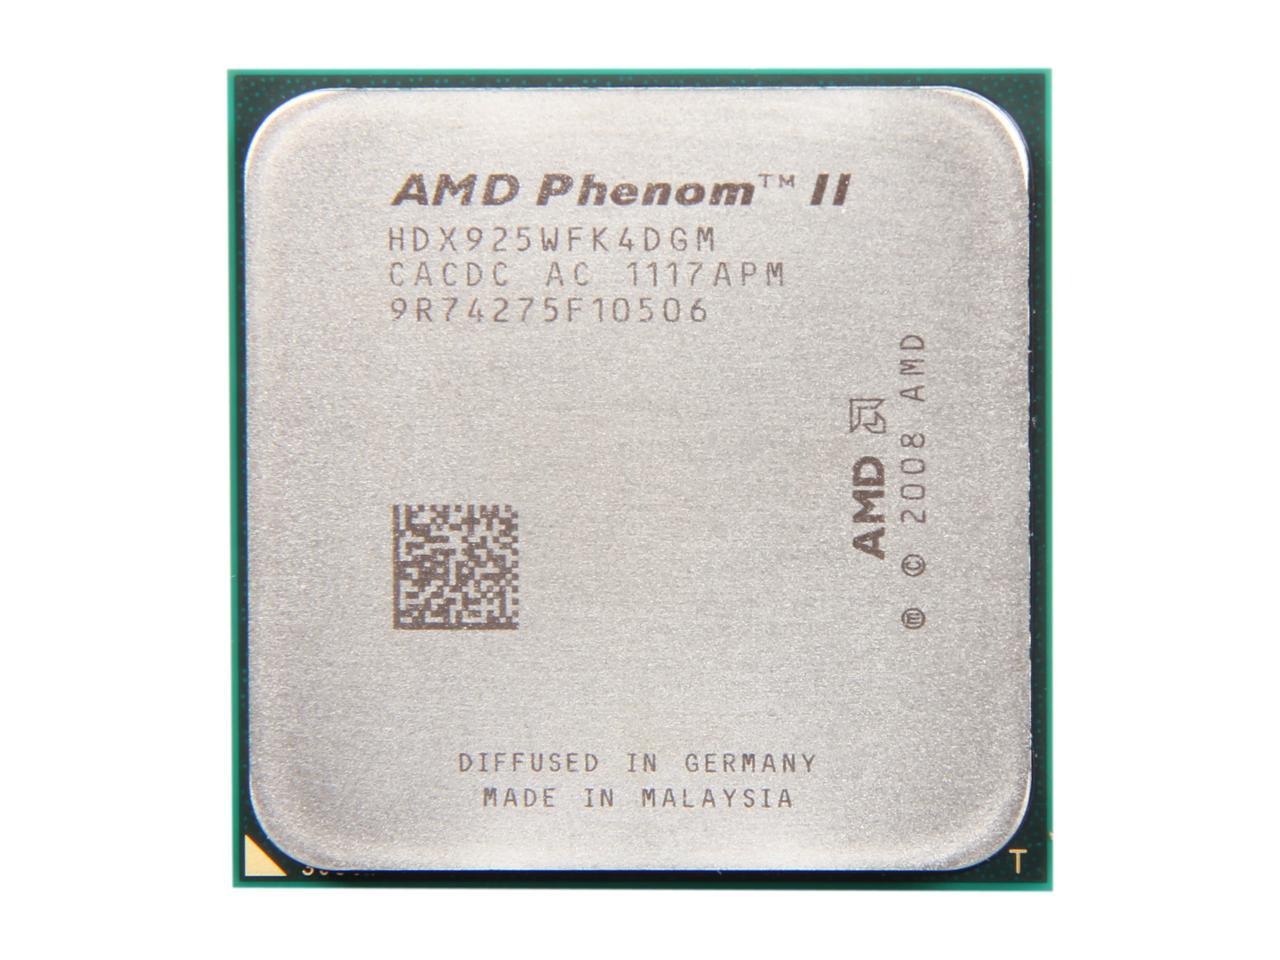 Amd phenom сравнение. AMD Phenom II x4 925. AMD Phenom II x4 Deneb 925 am3, 4 x 2800 МГЦ. AMD Phenom II x4 940. AMD Phenom II x4 Deneb 965 am3, 4 x 3400 МГЦ.